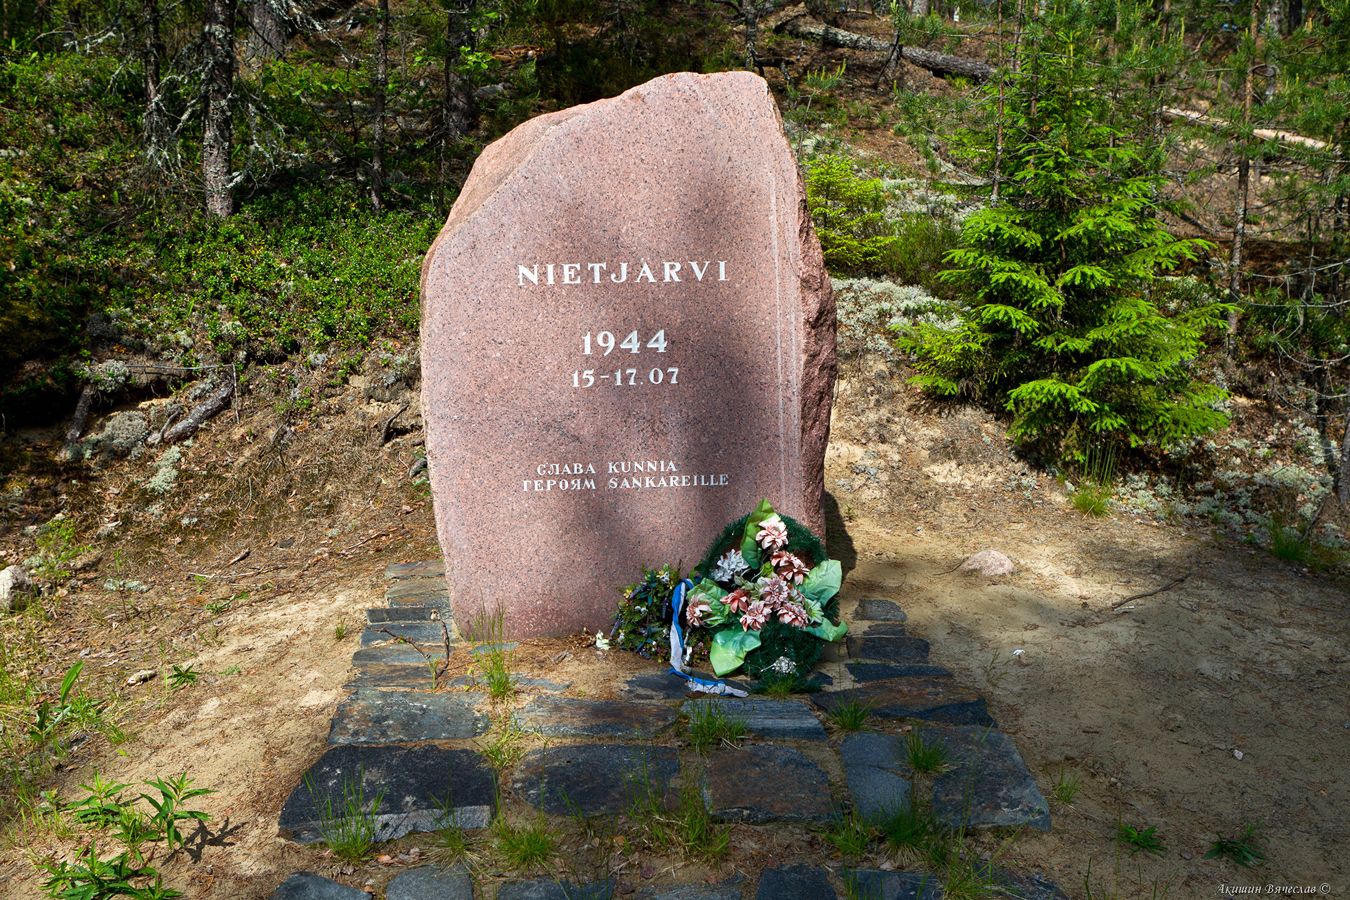 2011. The monument to the battle on Nietjärvi Lake